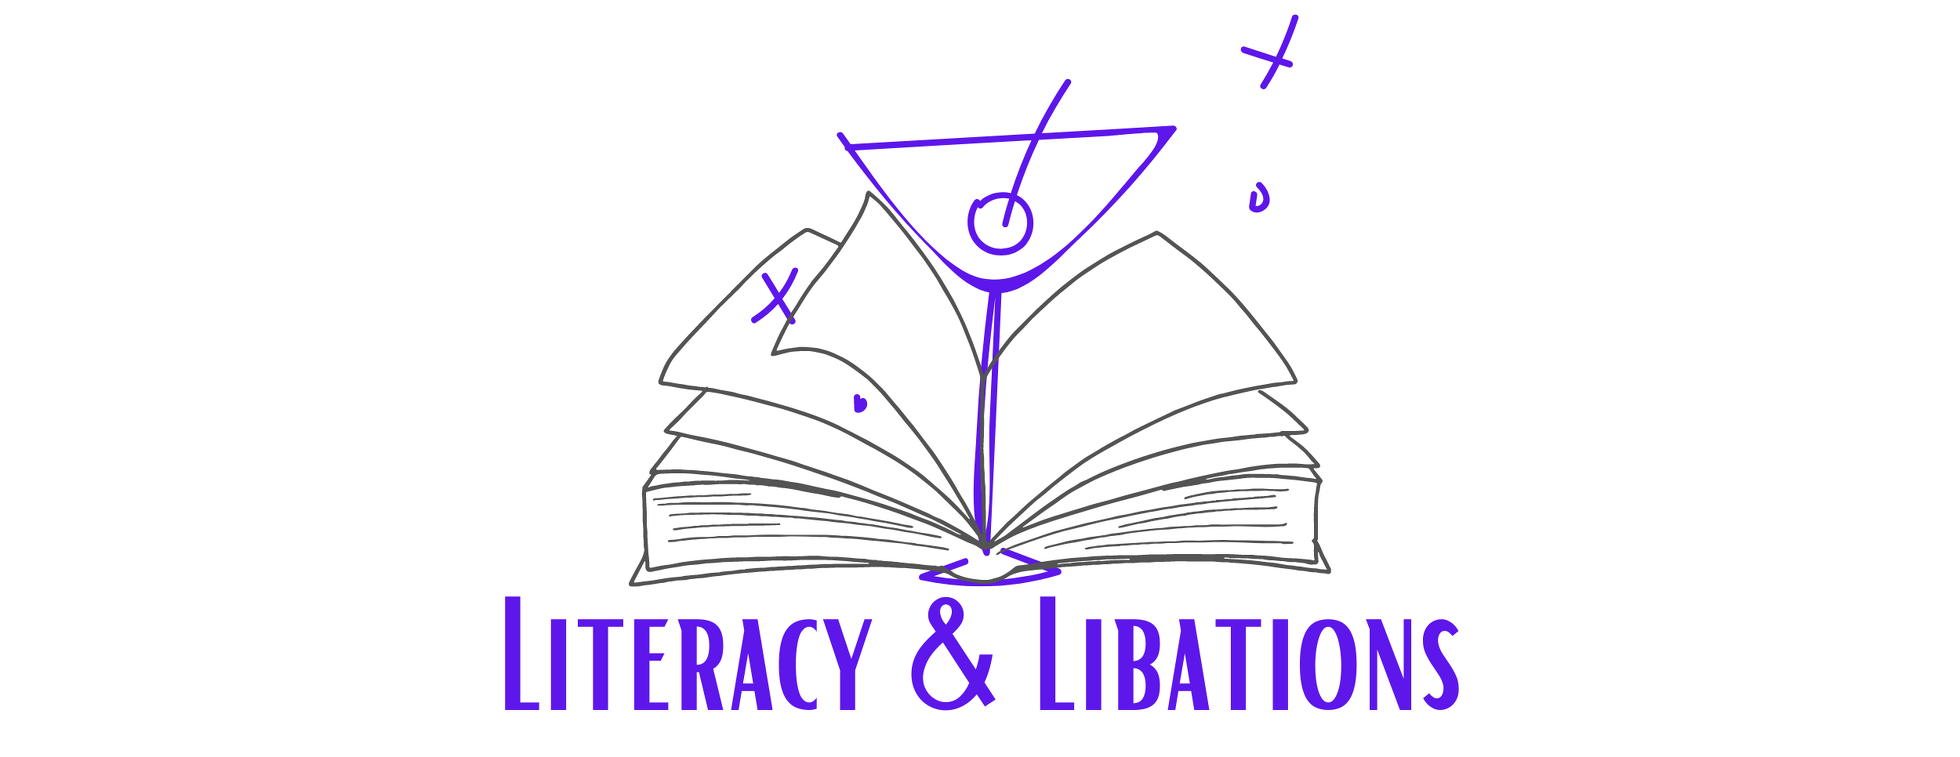 Literacy & Libations